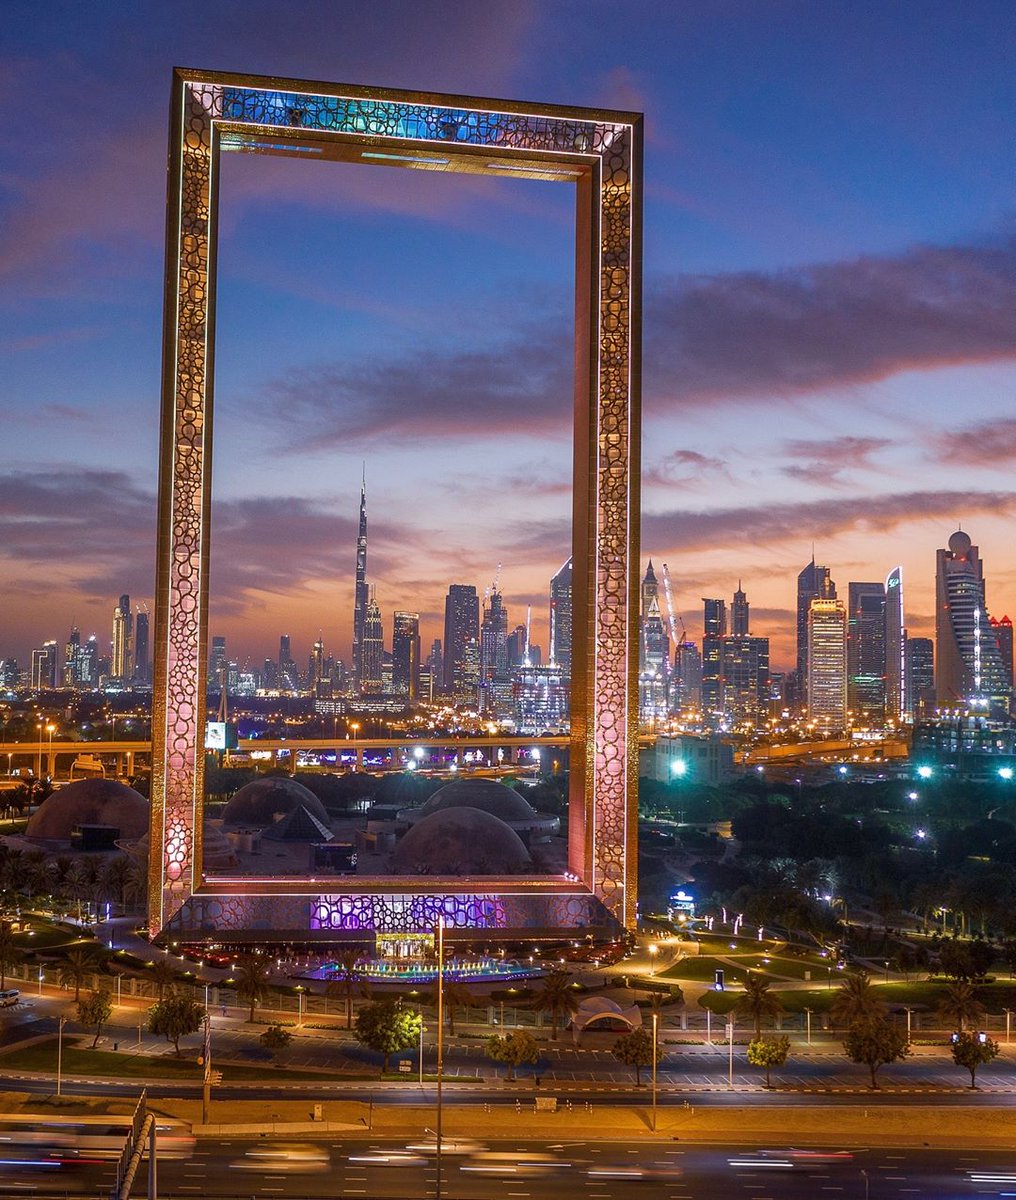 🔲 Dubai Frame
📍 Dubai
-
📷 @abdullalbuqaish || #Dubaiholidays.co Follow @Dubai_holidays for more! 👌
-
#Burj_Al_Arab #burjalarab #burjkhalifa #dubaifountain #dubailife #mydubai #abudhabi #atlantisthepalm #desert #dubaicity #Burj_khalifa #visitdubai #dubaidesert #Dubai